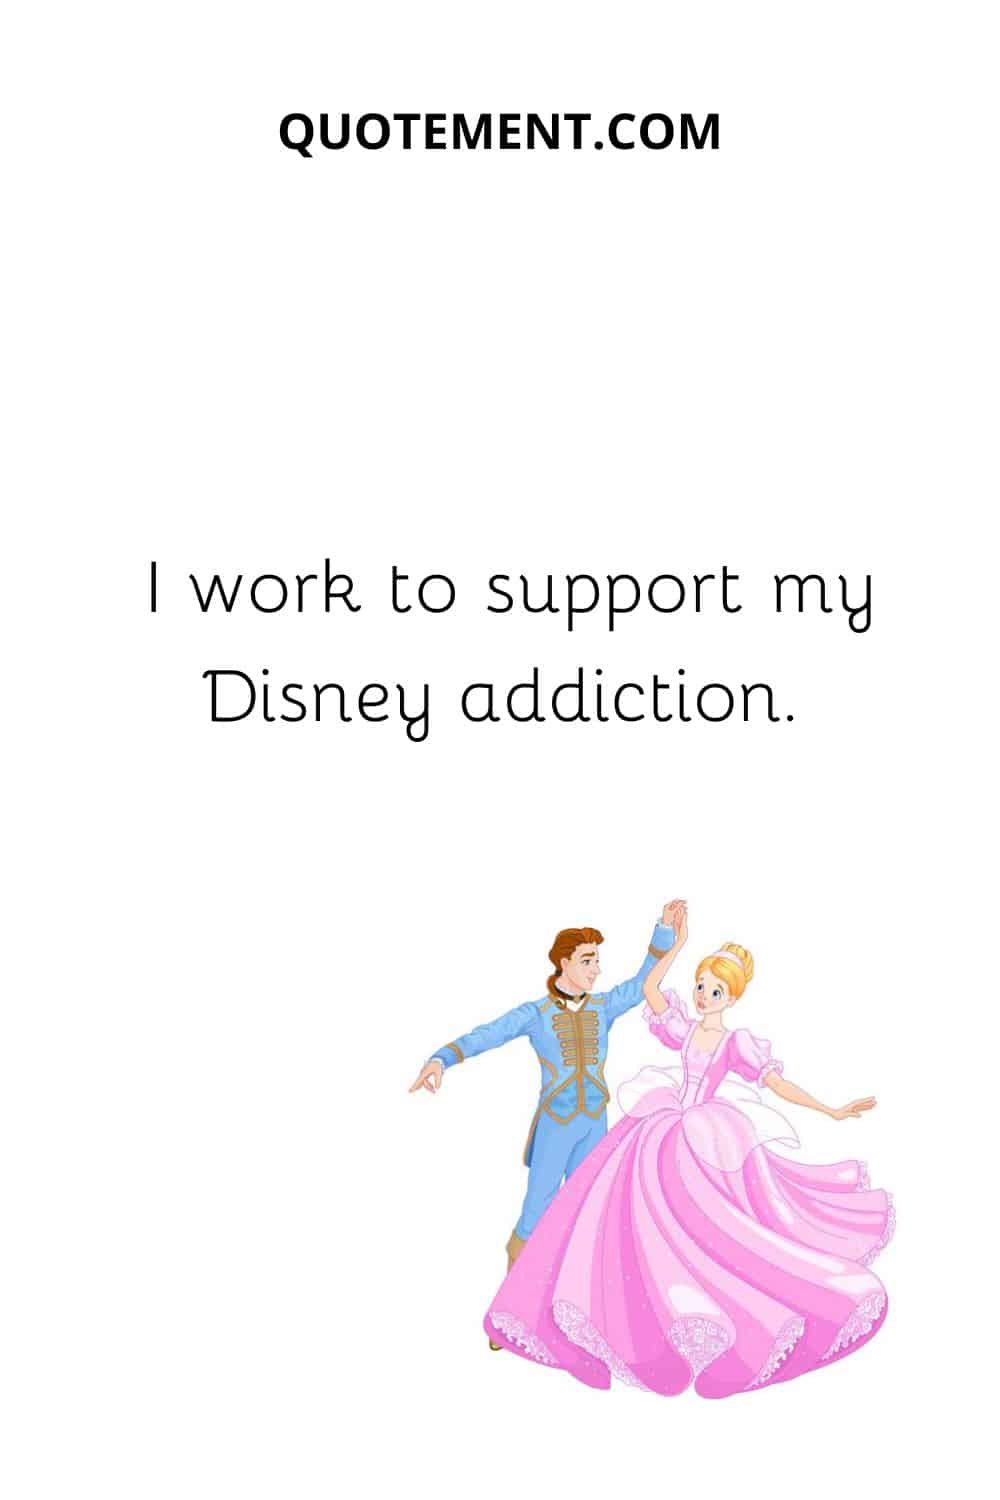 I work to support my Disney addiction